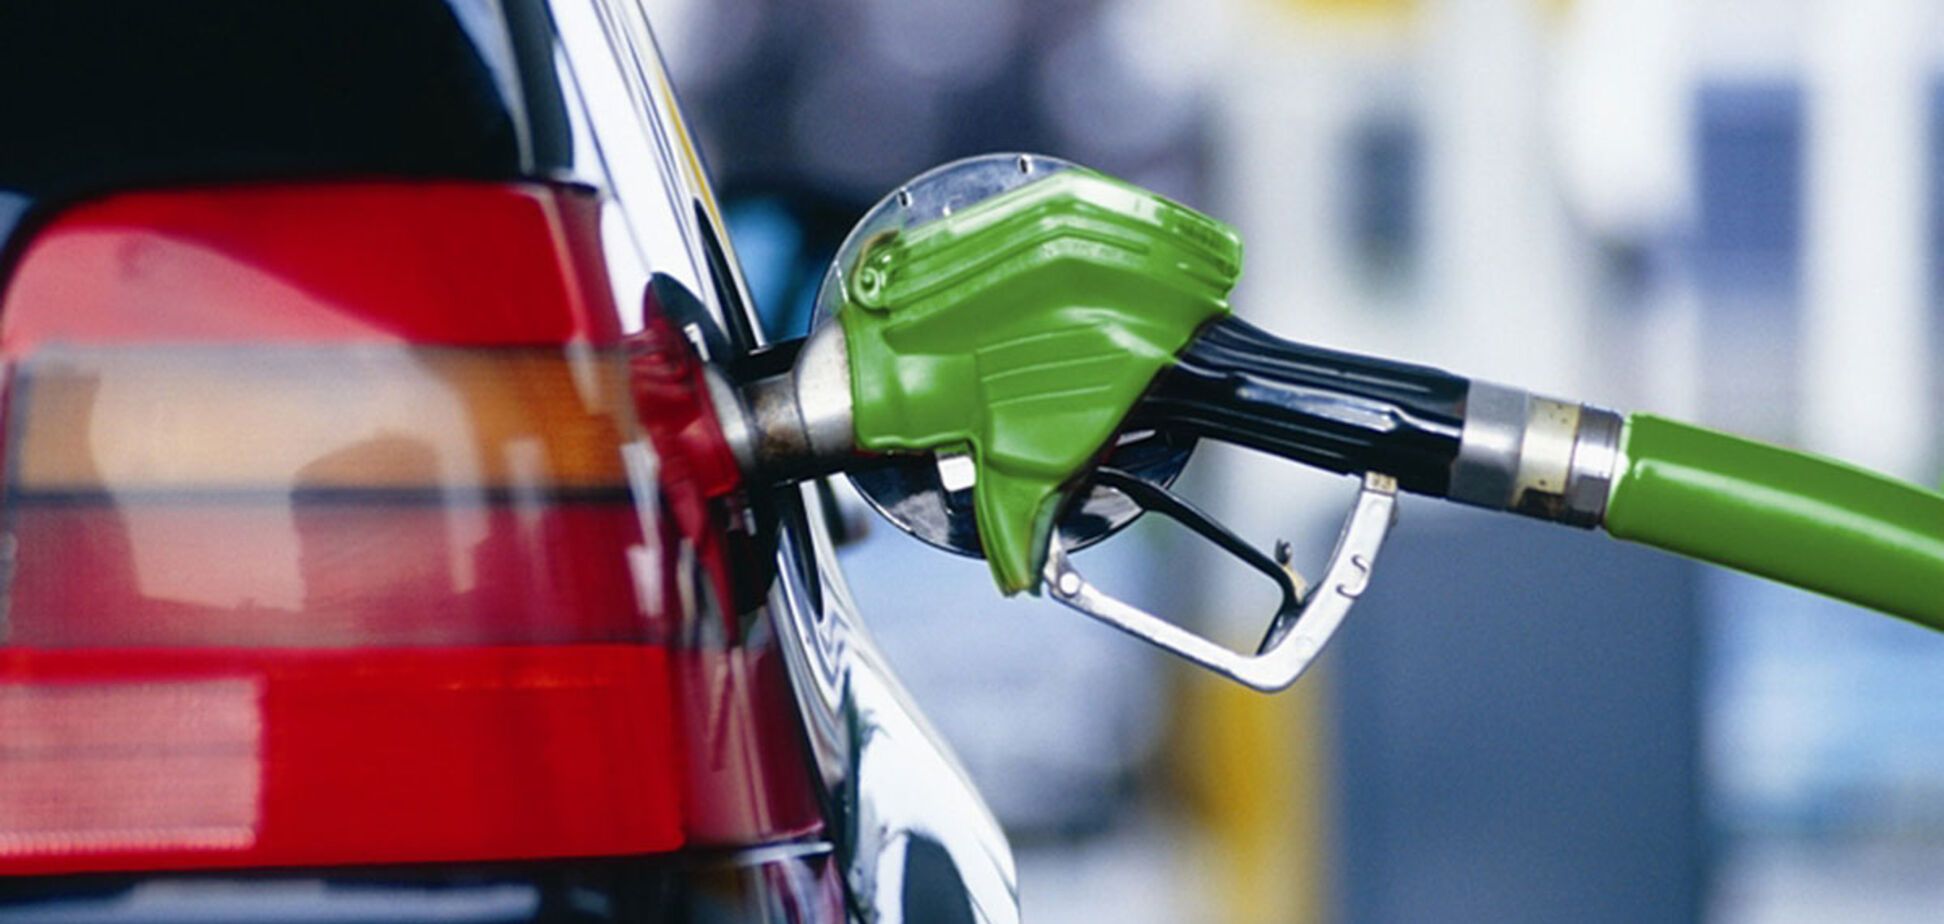 Скачок цен на бензин и дизтопливо в Украине: появился прогноз  